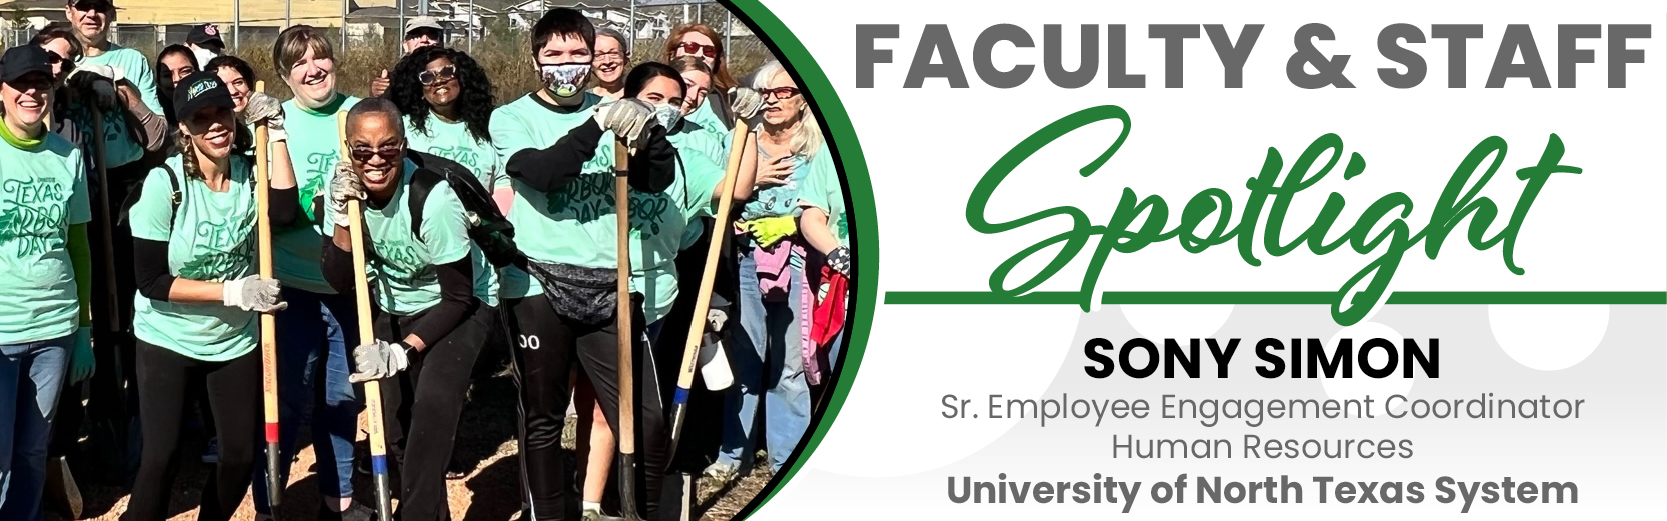 Faculty & Staff Spotlight: Sony Simon, UNT System